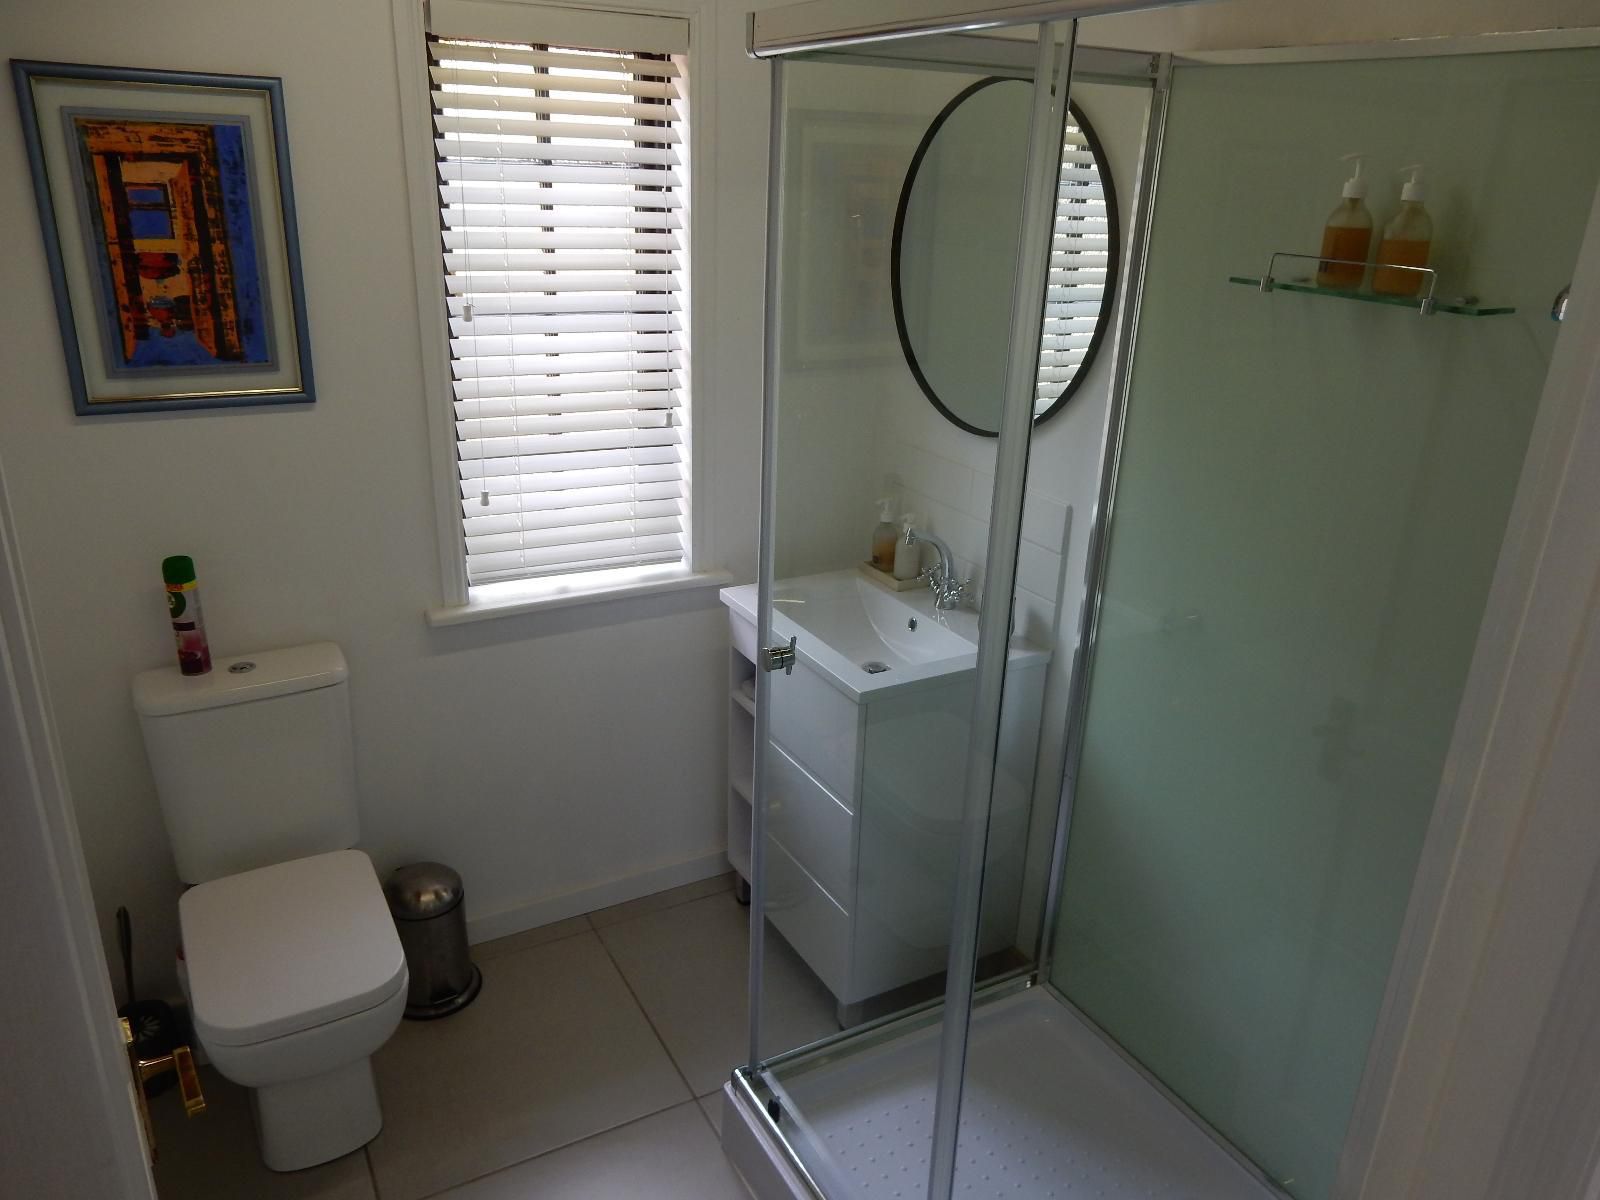 Mountain View Swellendam Swellendam Western Cape South Africa Unsaturated, Bathroom